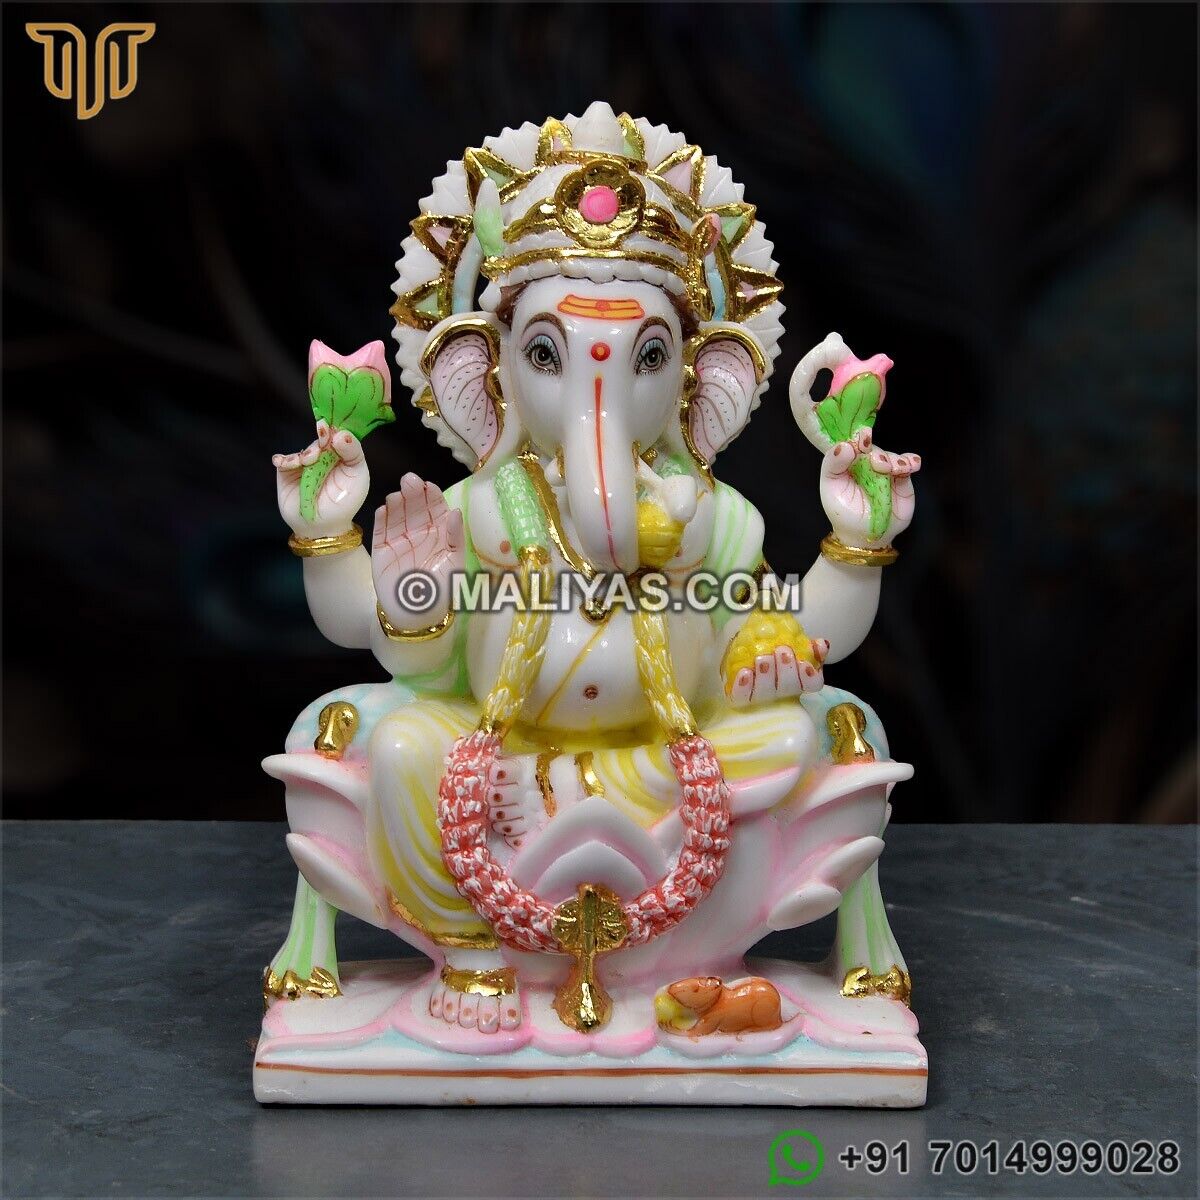 Artificial Marble Ganesh Idols, Fiber Ganesh Statue, Artificial marble Ganpati